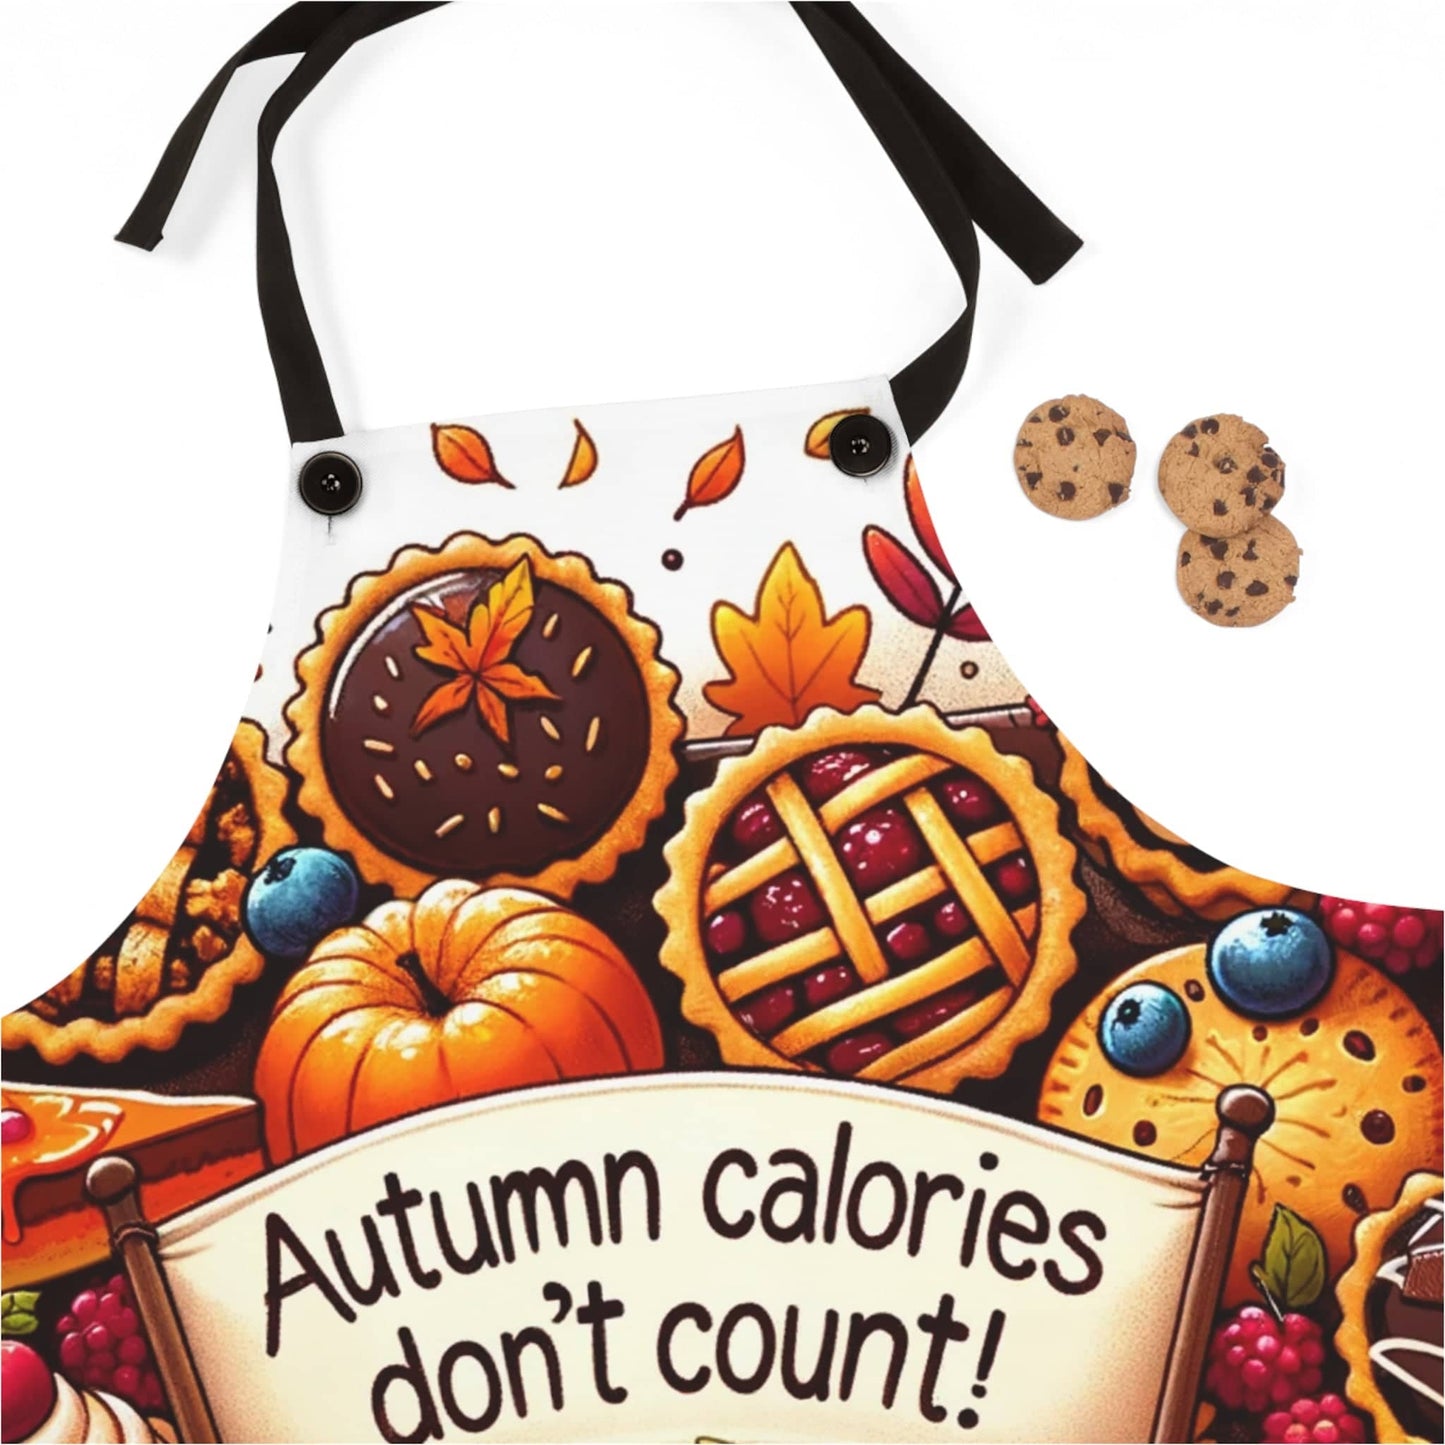 Autumn Calories Don't Count Apron Accessories Bigger Than Life   